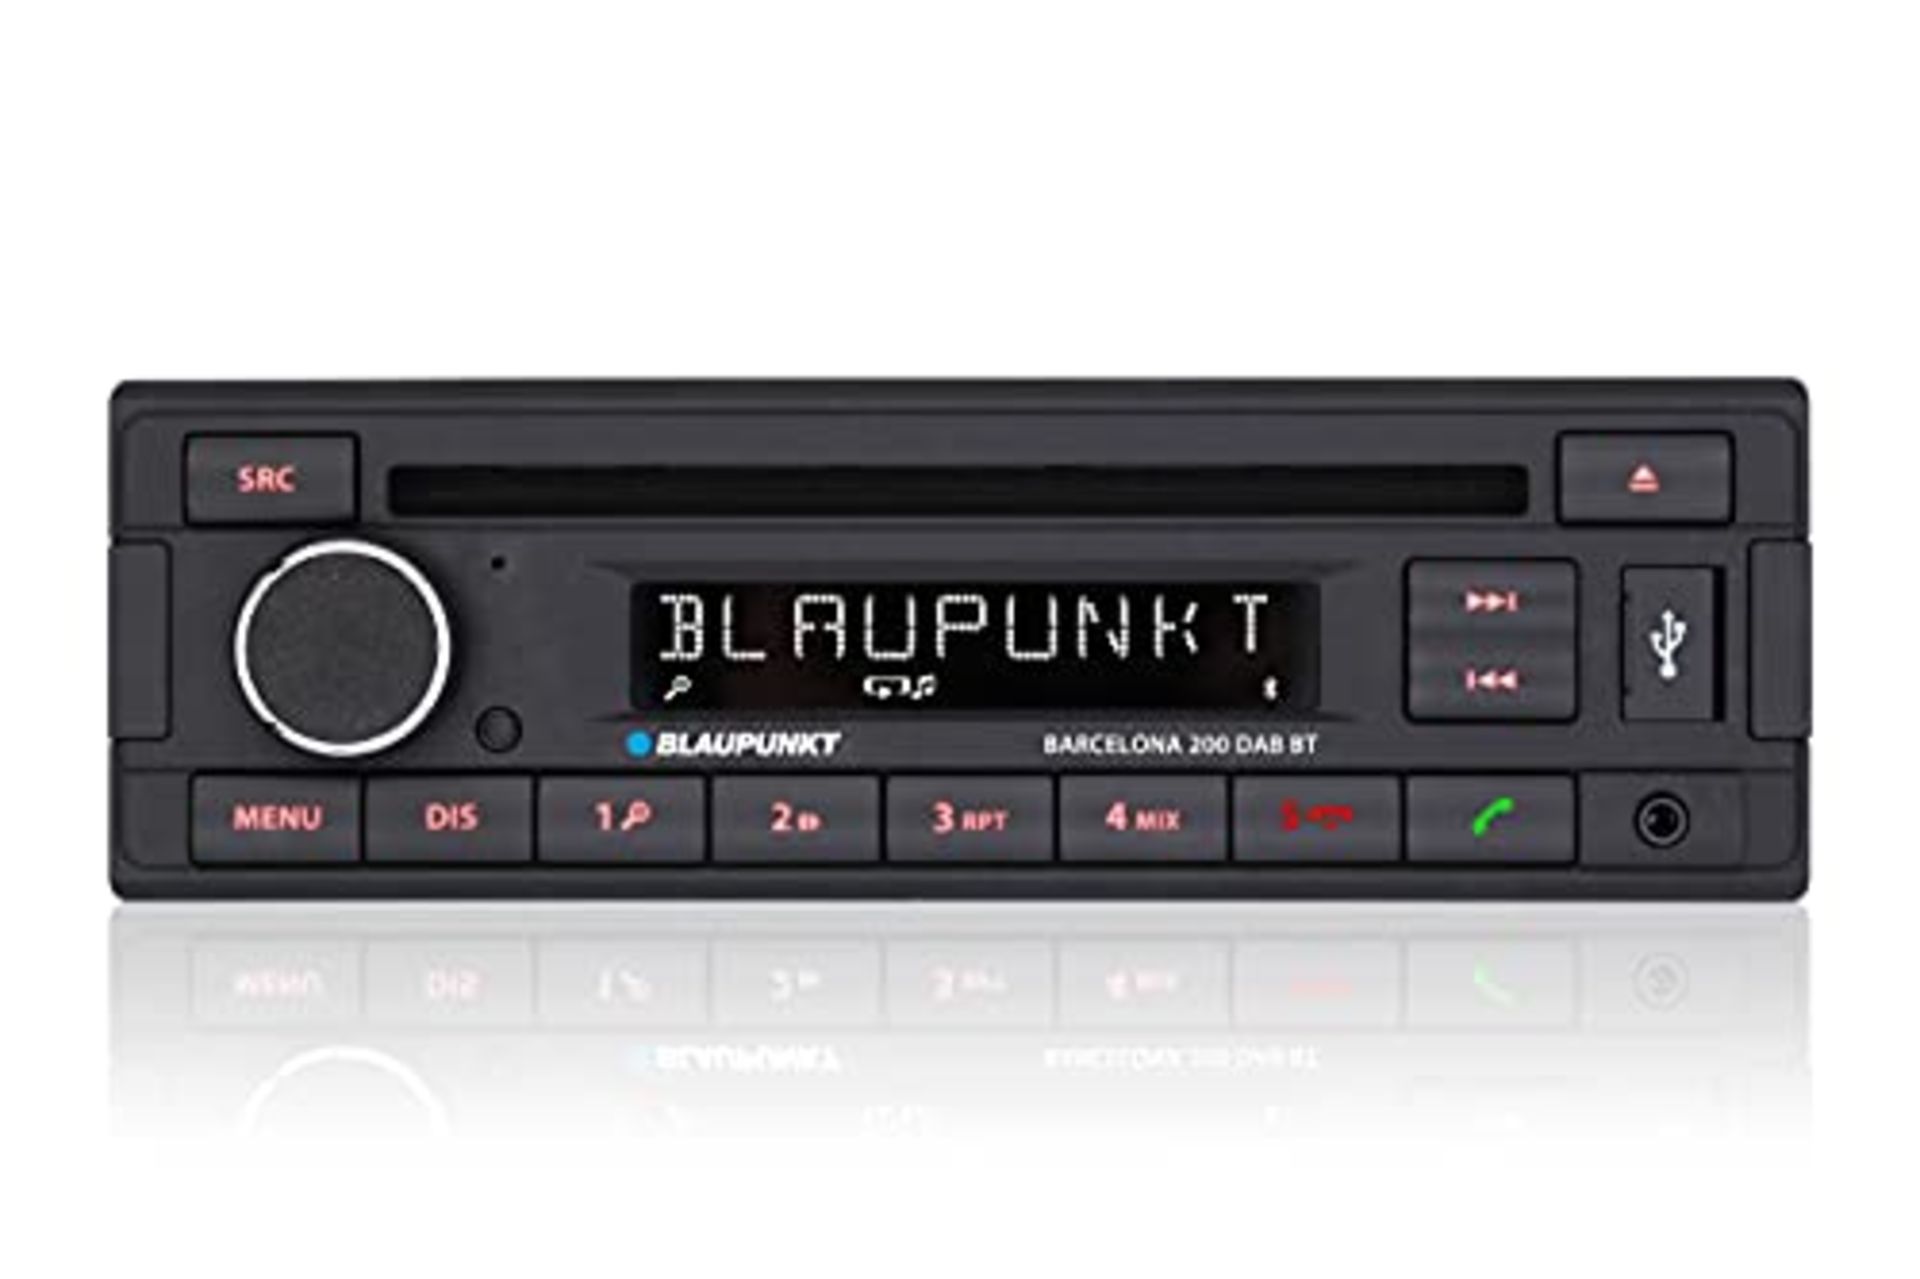 RRP £140.00 Blaupunkt Barcelona 200 DAB BT Car Radio with Bluetooth Hands-Free Calling, DAB+ Tuner